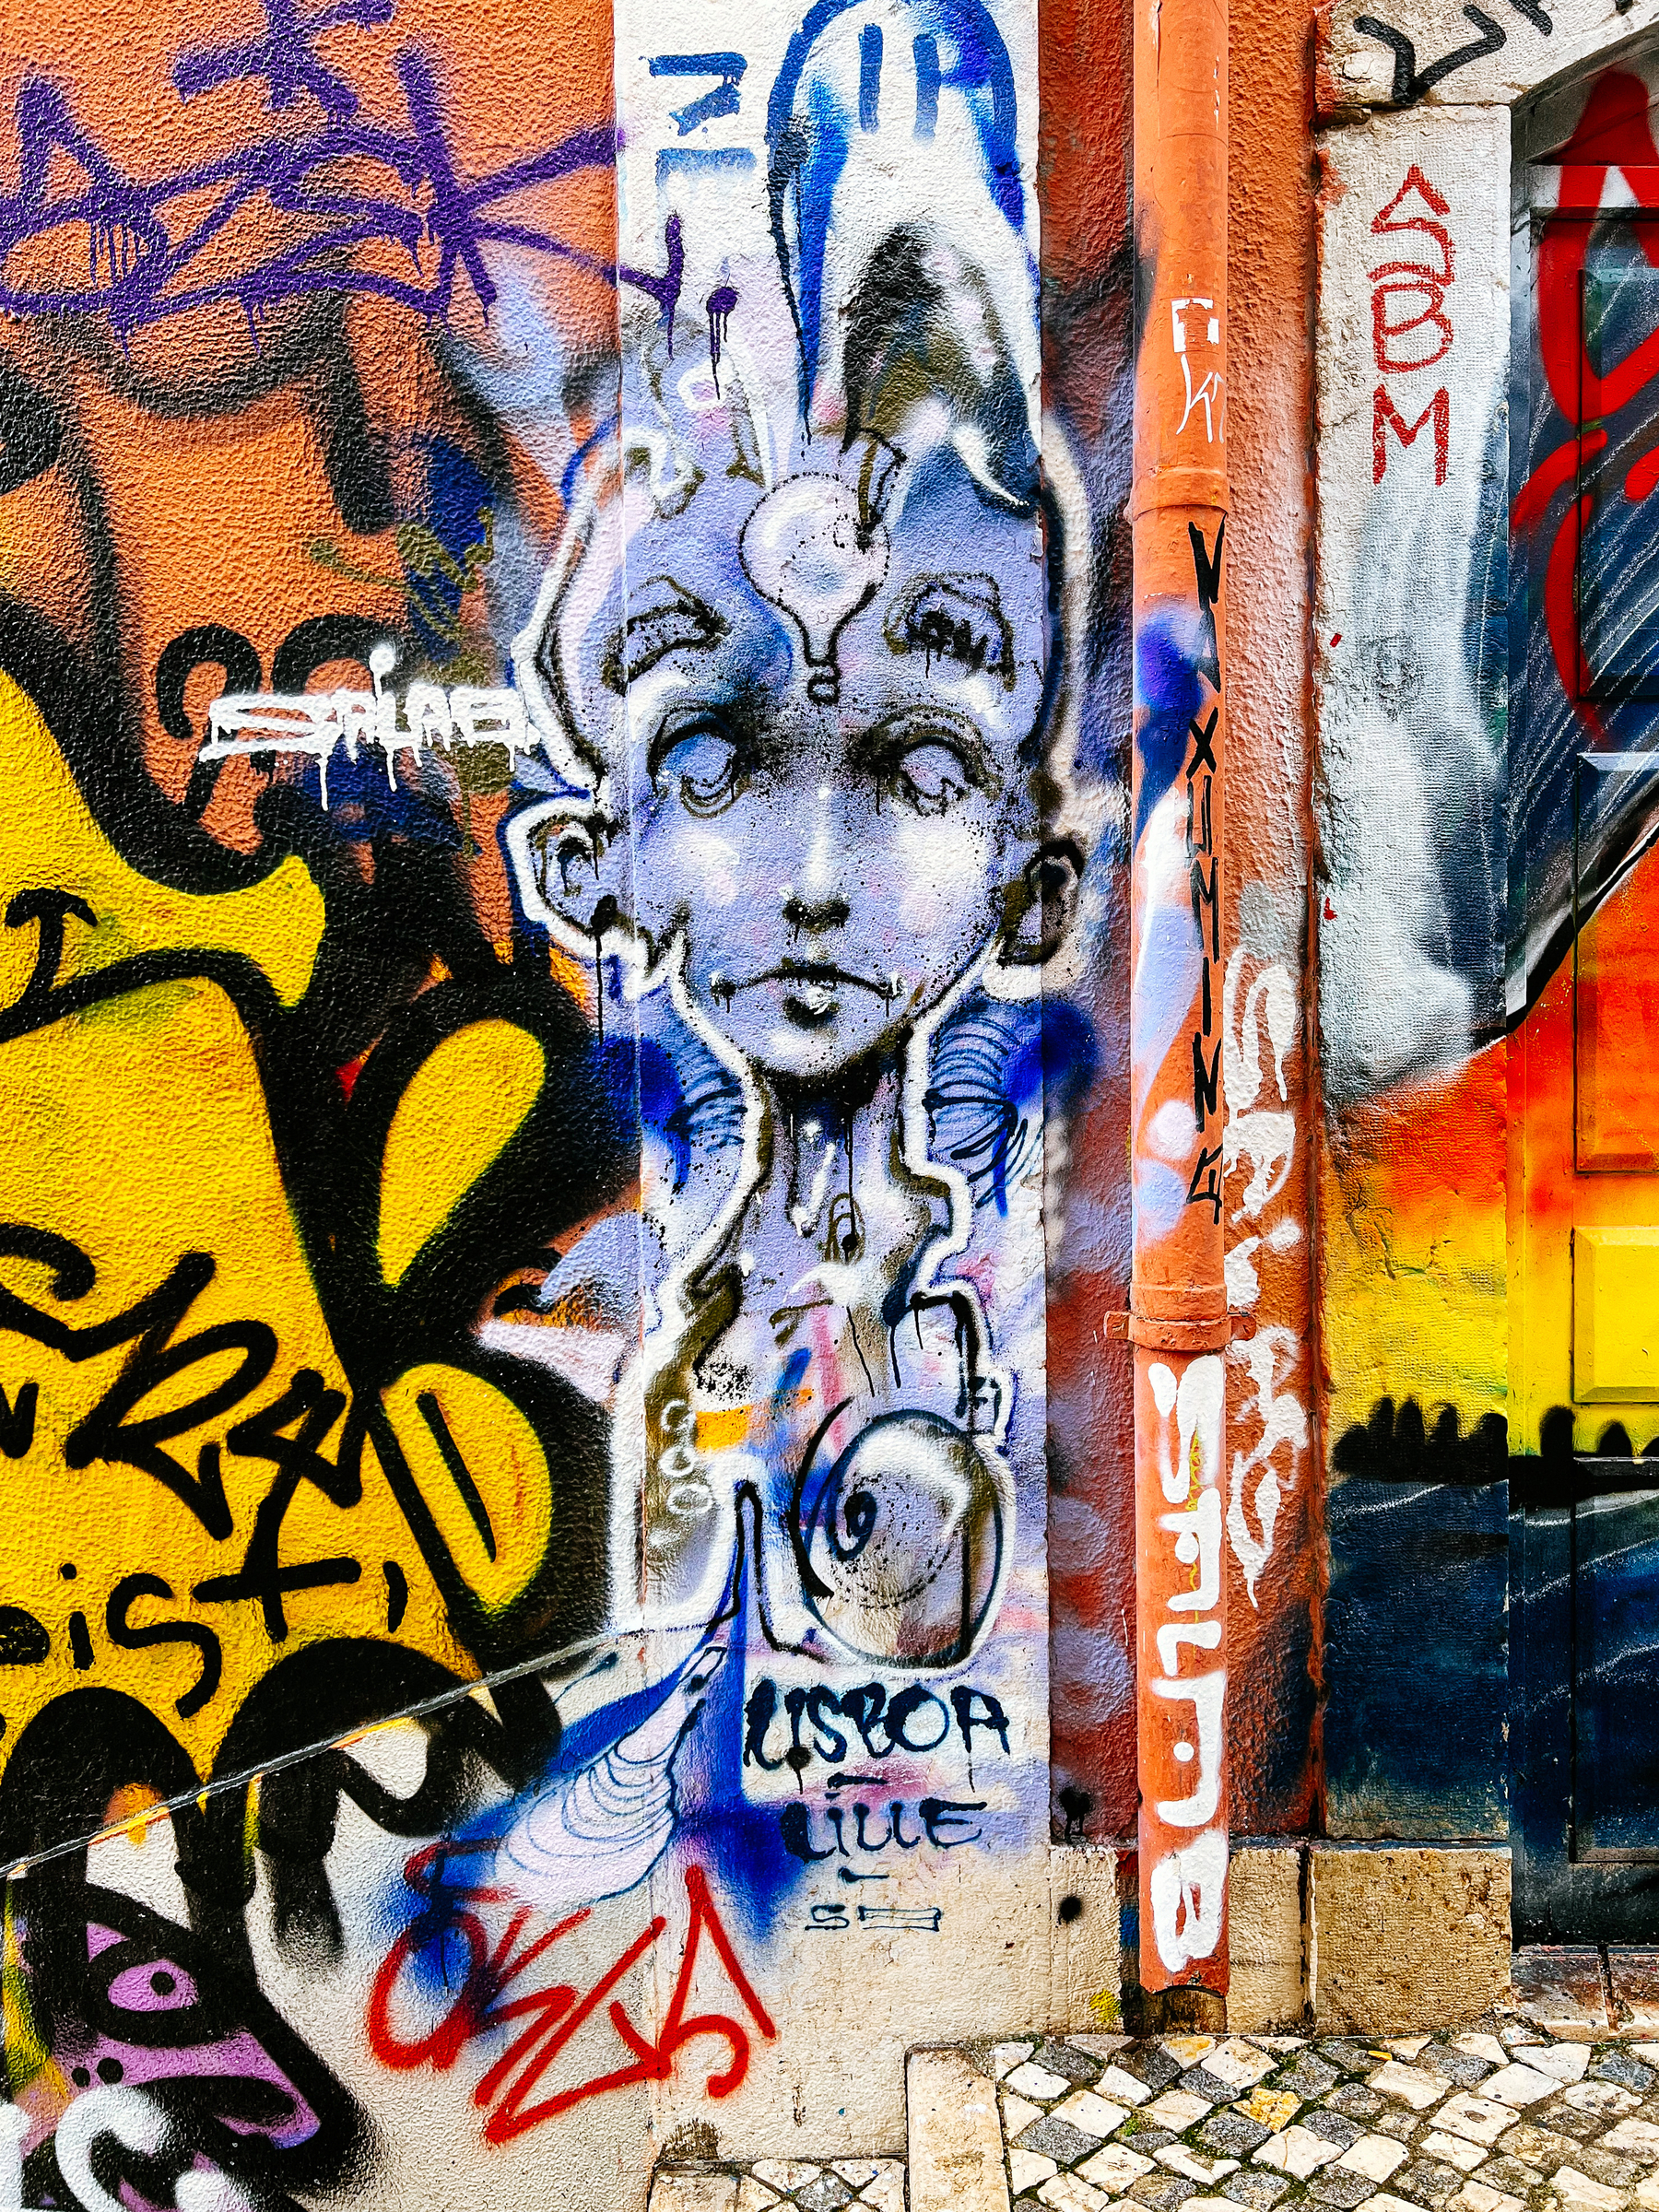 Graffiti, a strange looking alien painted on a wall